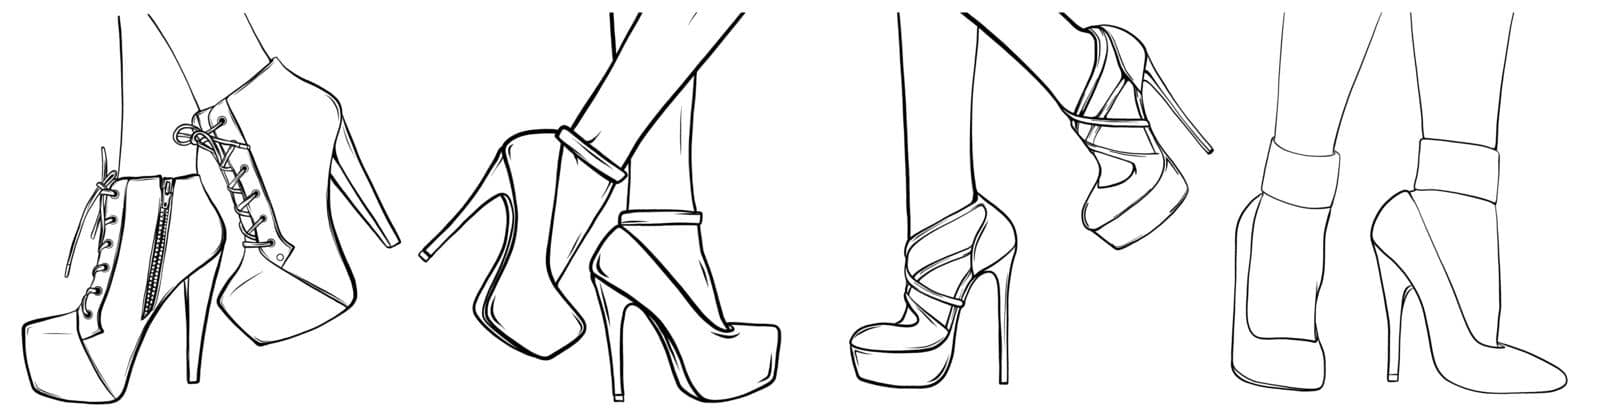 fashion high heels shoes. Pop art illustration.